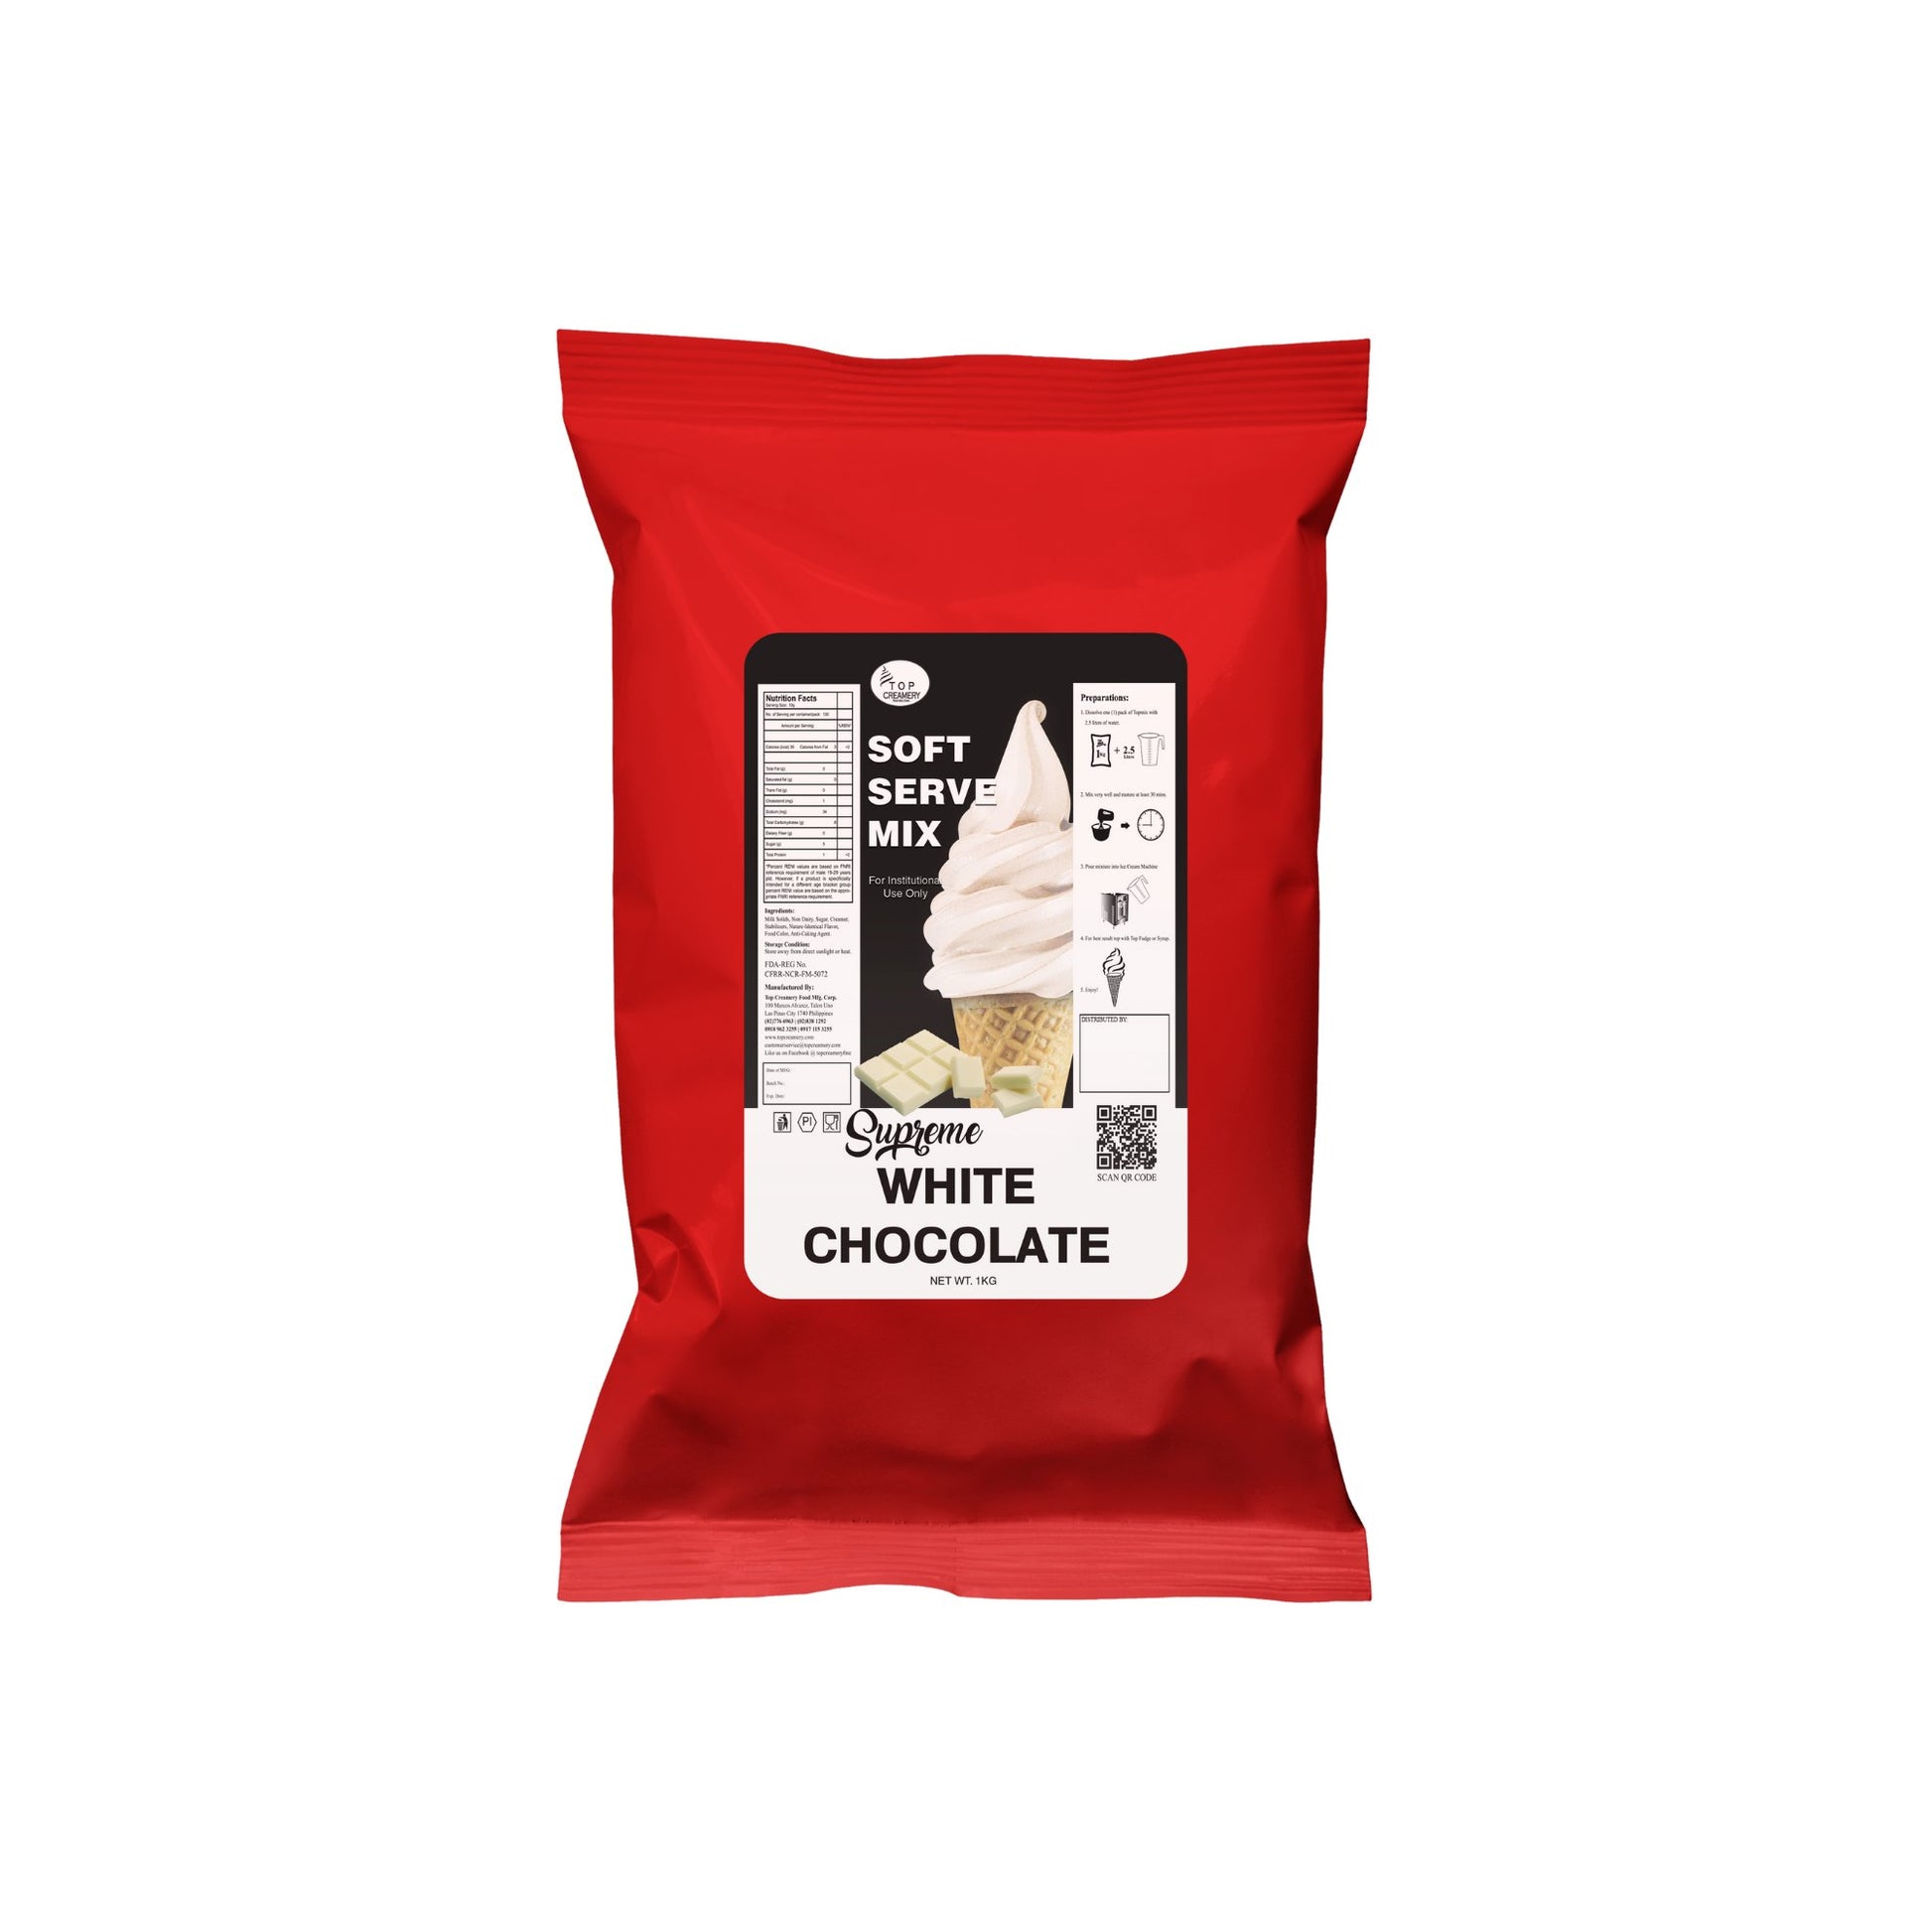 TOP Creamery Supreme White Chocolate Soft Serve Ice Cream Powder Premix 1kg - Kreme City Supplies